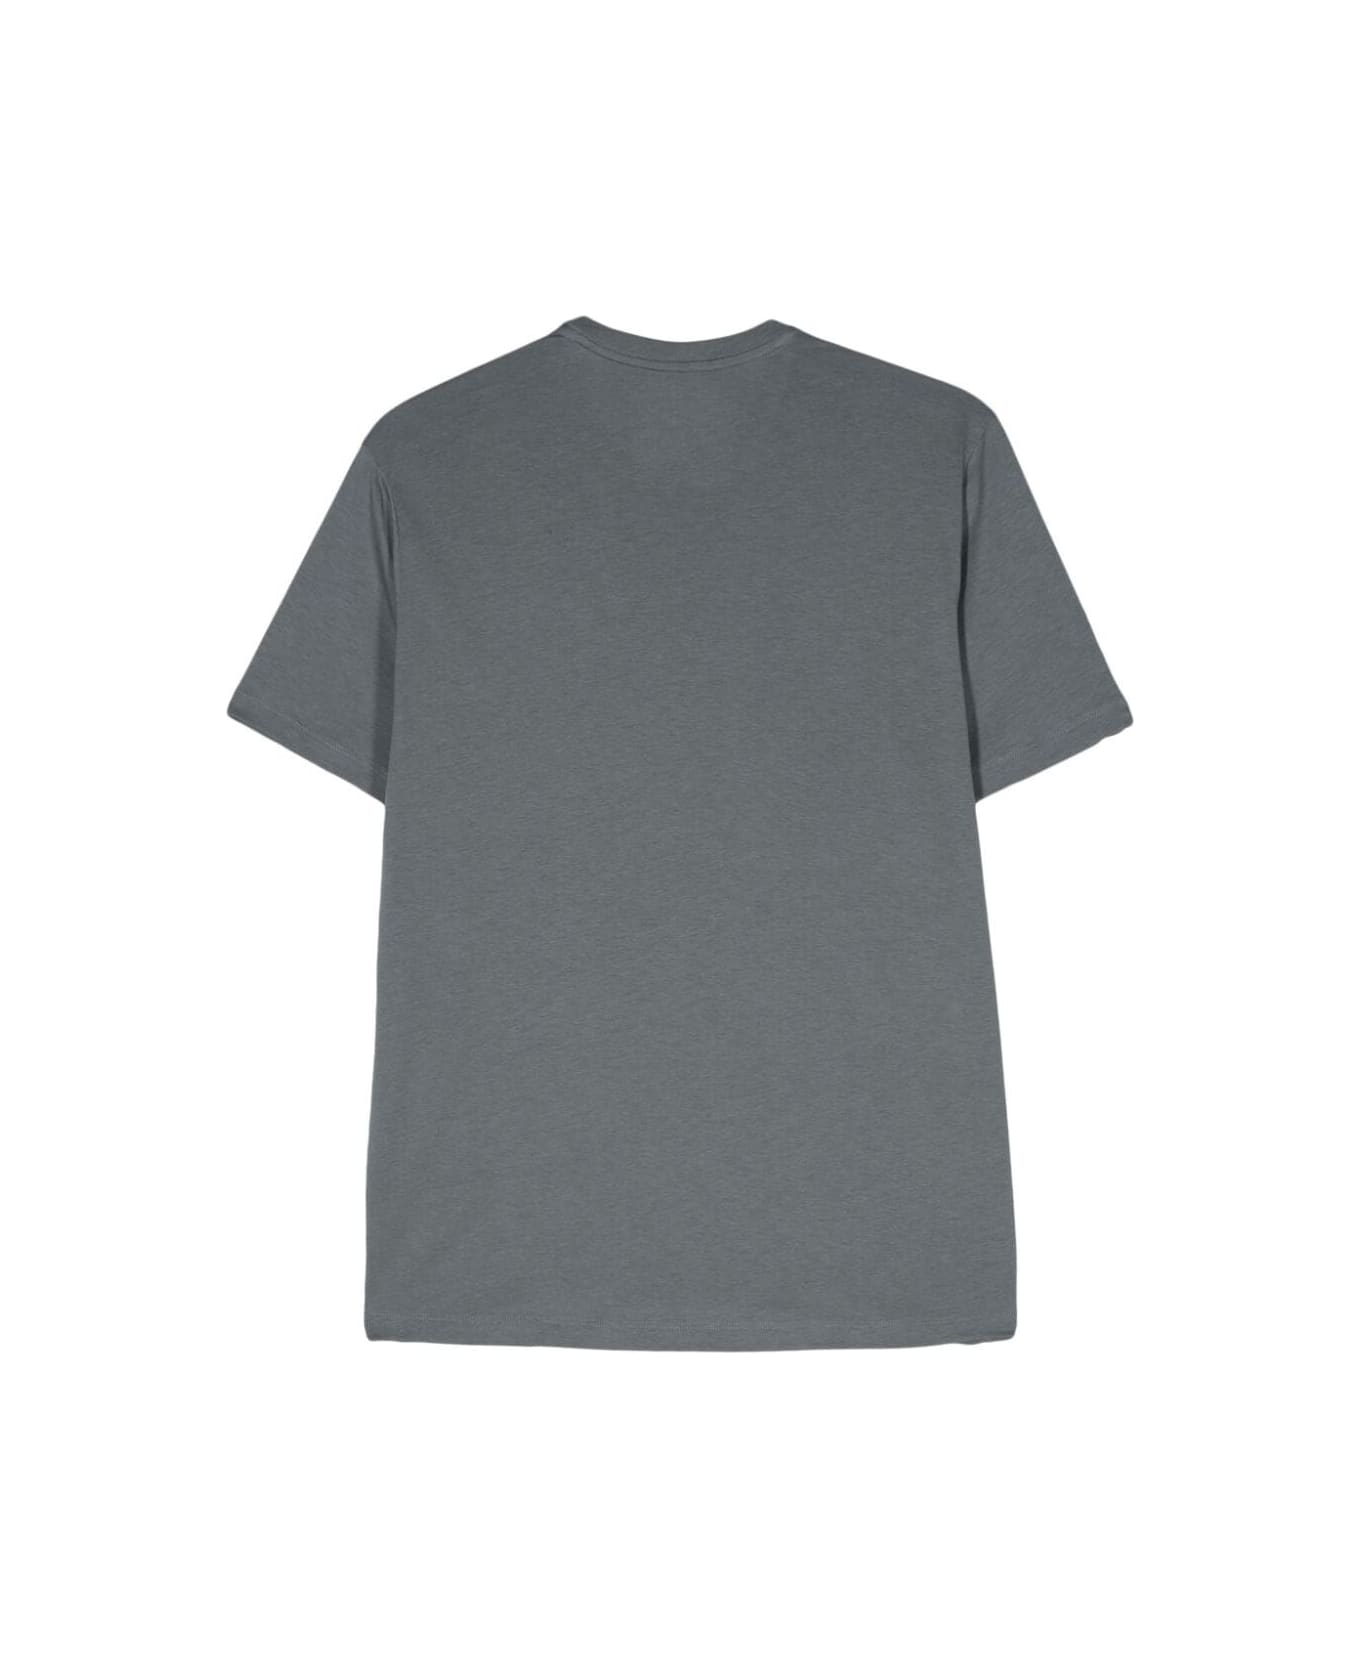 Majestic Filatures Short Sleeve Round Neck T-shirt - Grey Blue シャツ